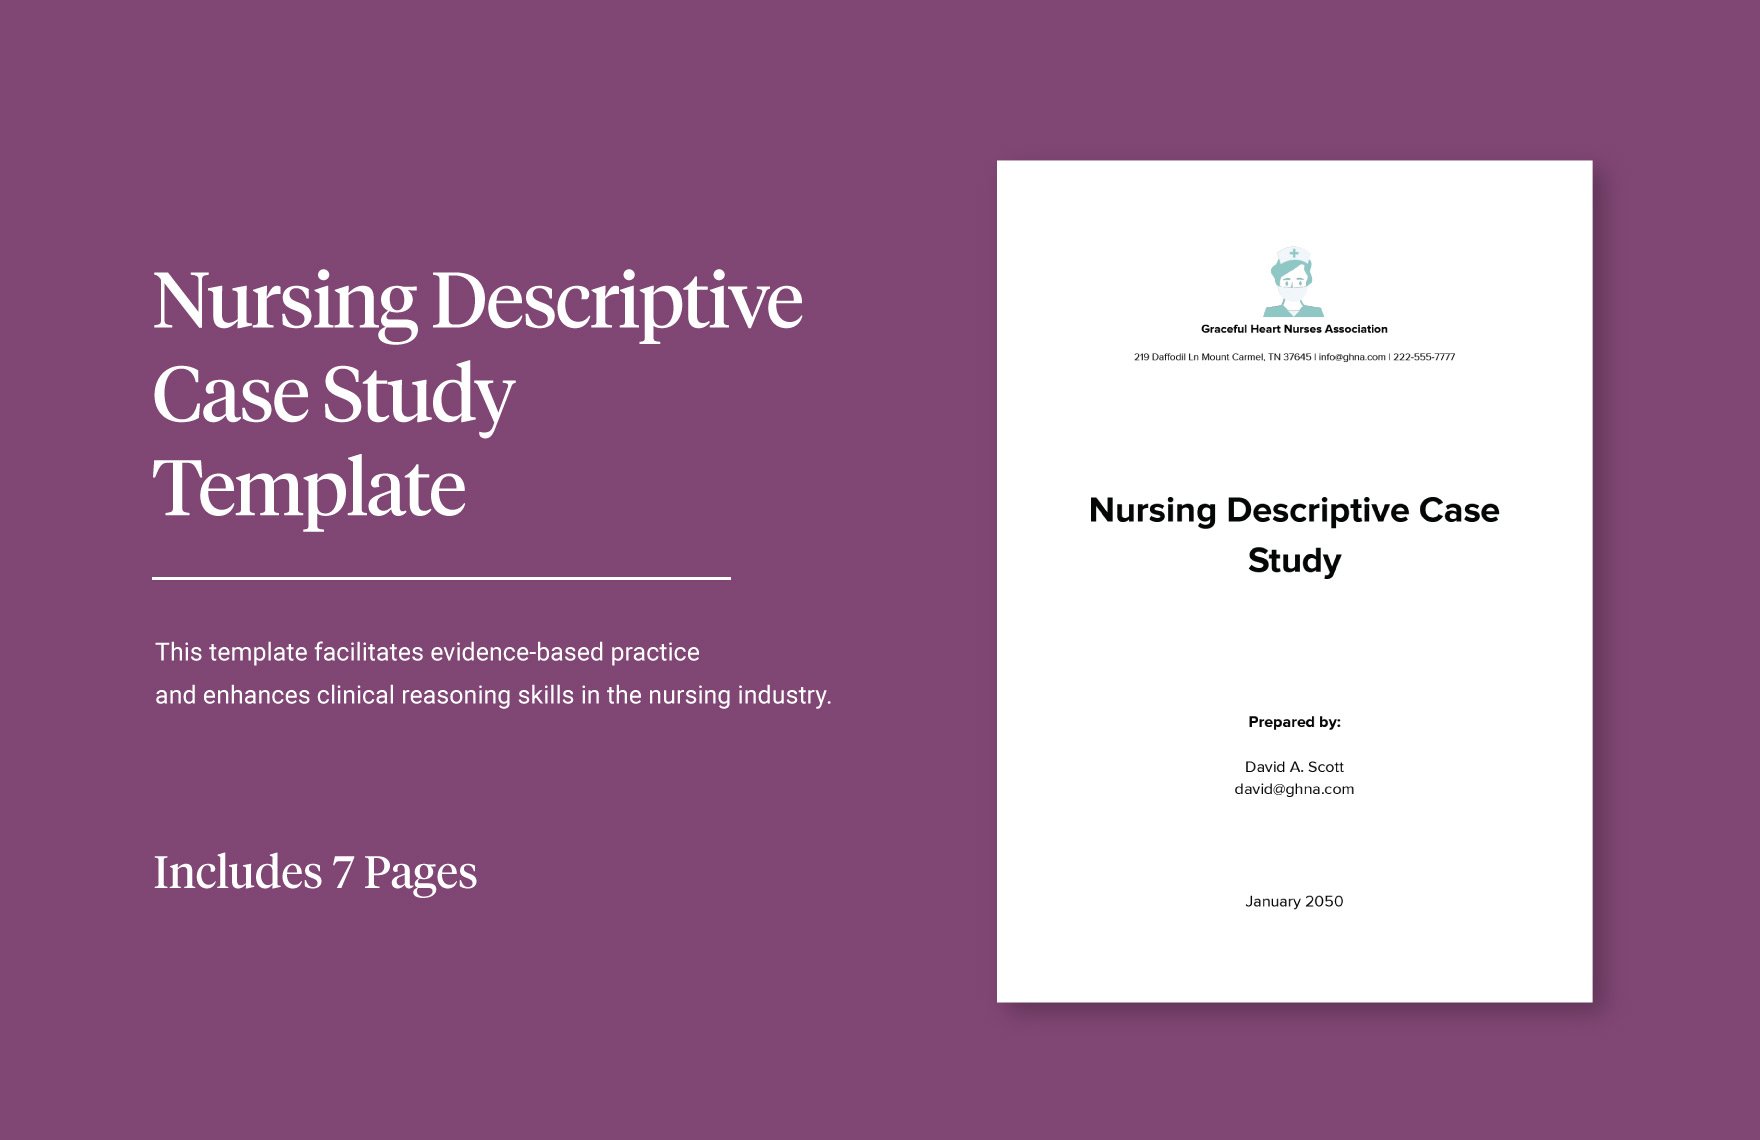 Nursing Descriptive Case Study Template